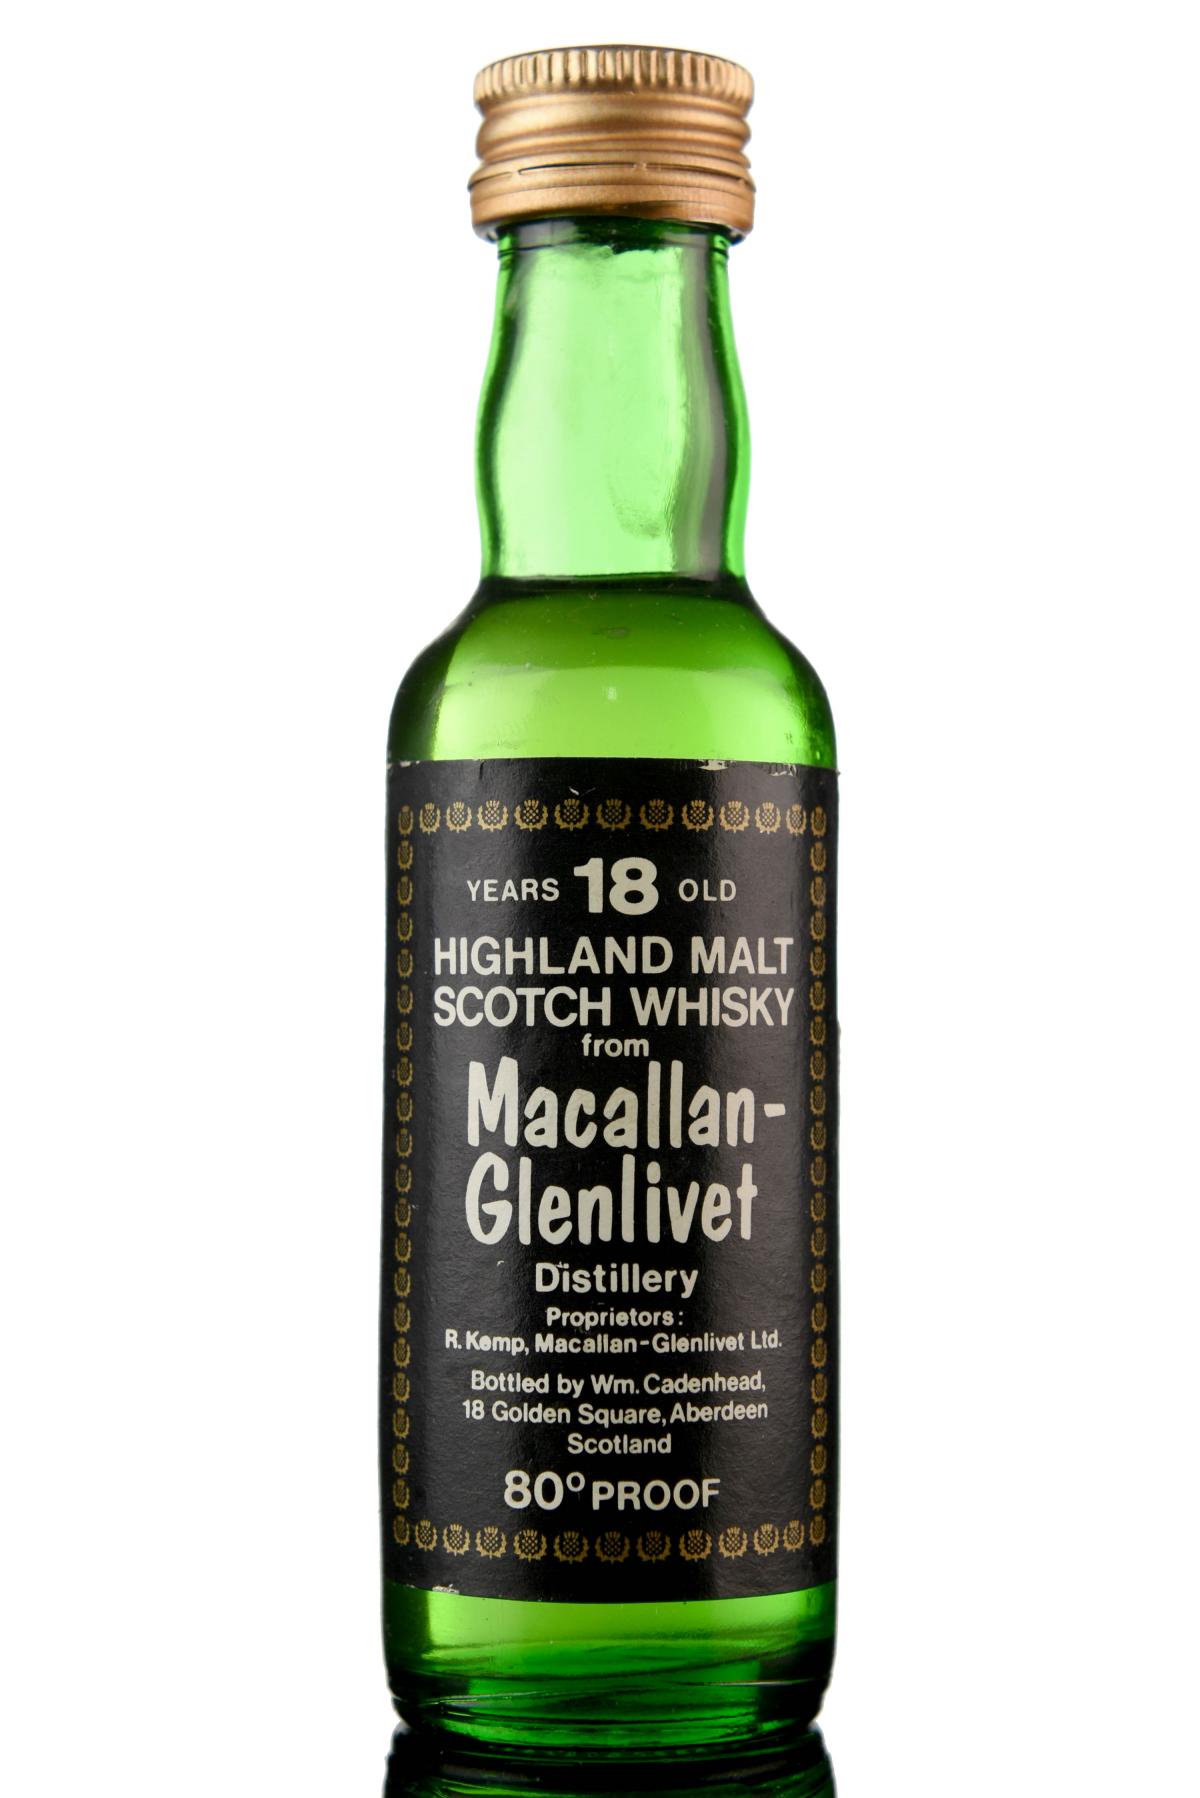 Macallan-Glenlivet 18 Year Old - Cadenhead Miniature